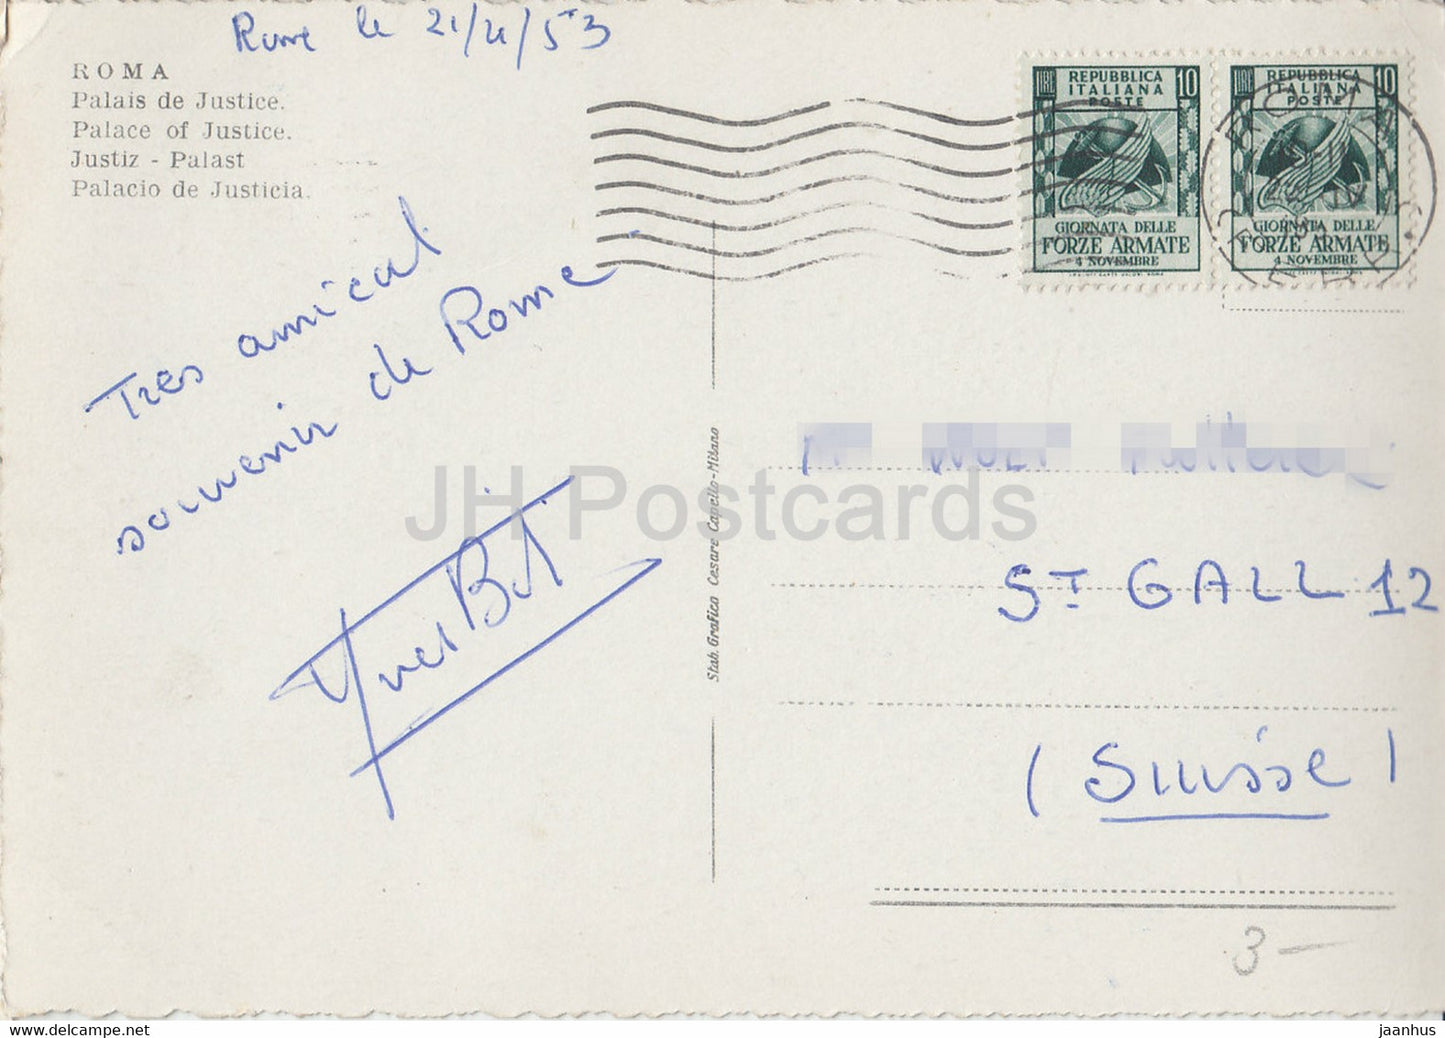 Roma - Rome - Palazzo di Giustizia - Palais de Justice - carte postale ancienne - 1953 - Italie - utilisé